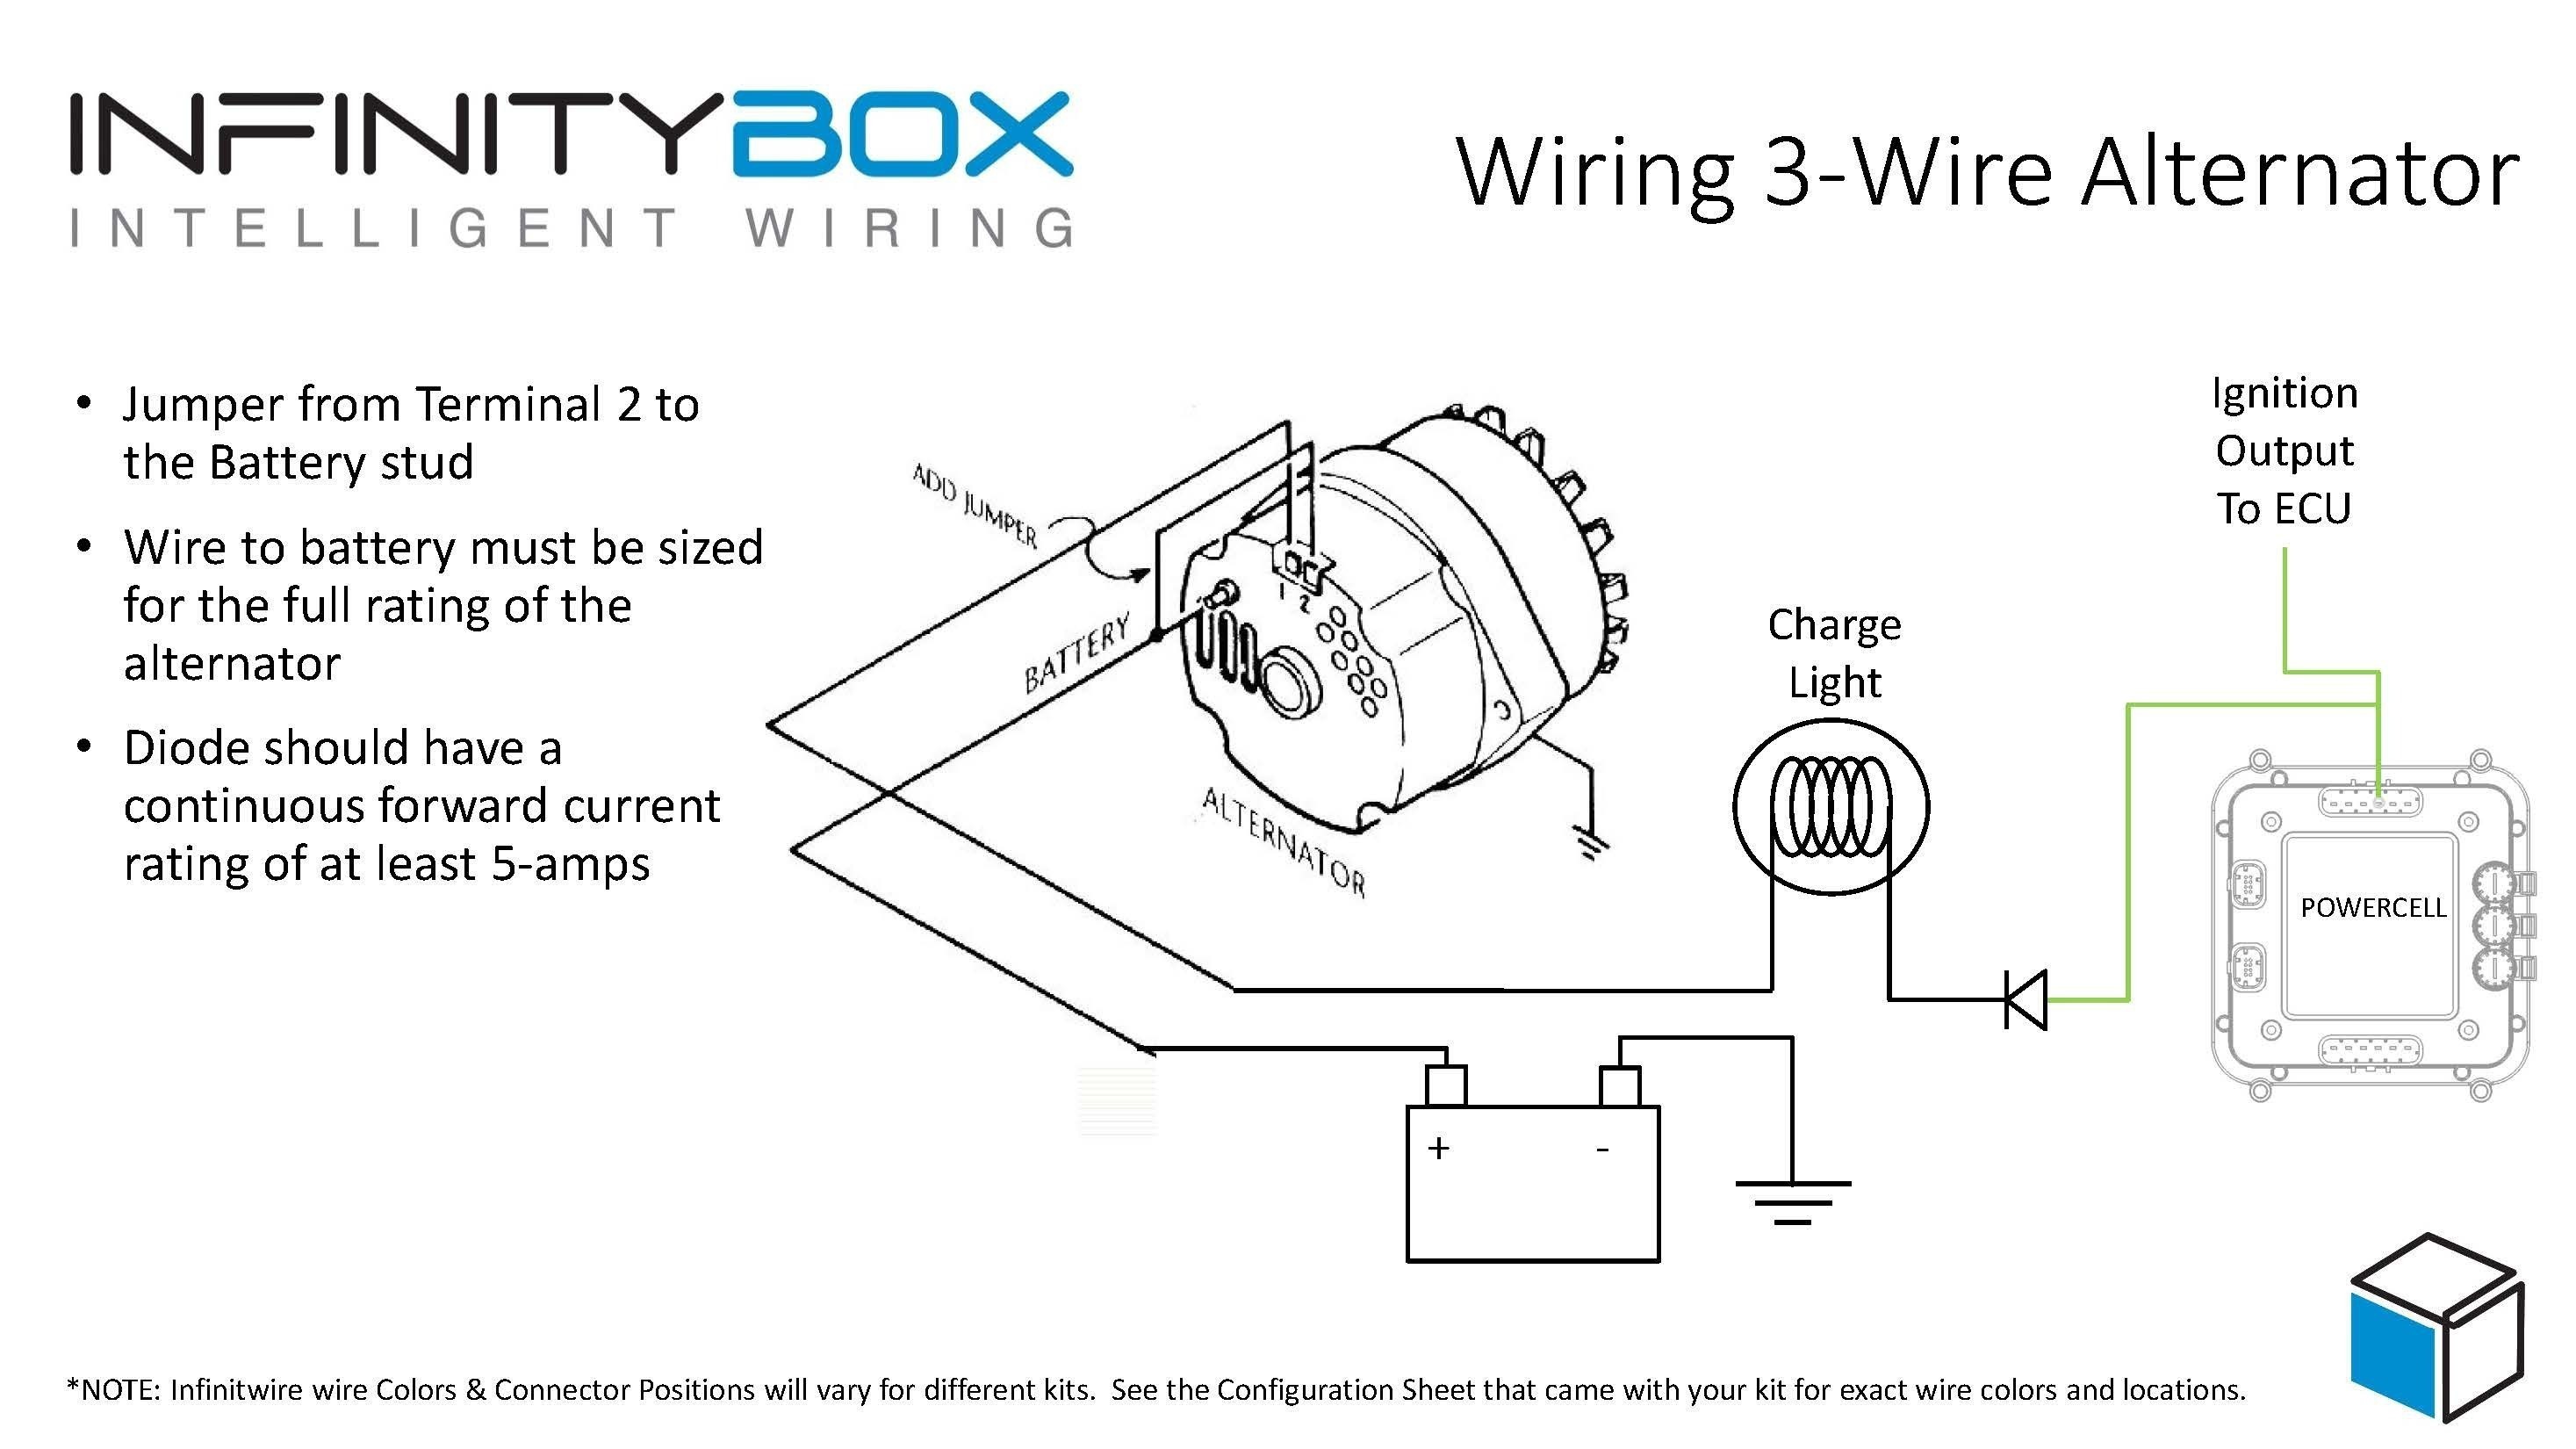 Wiring Diagram for 2 Wire Alternator Fresh Gm Alternator Wiring Diagram Inspirational 2 Wire Alternator Wiring